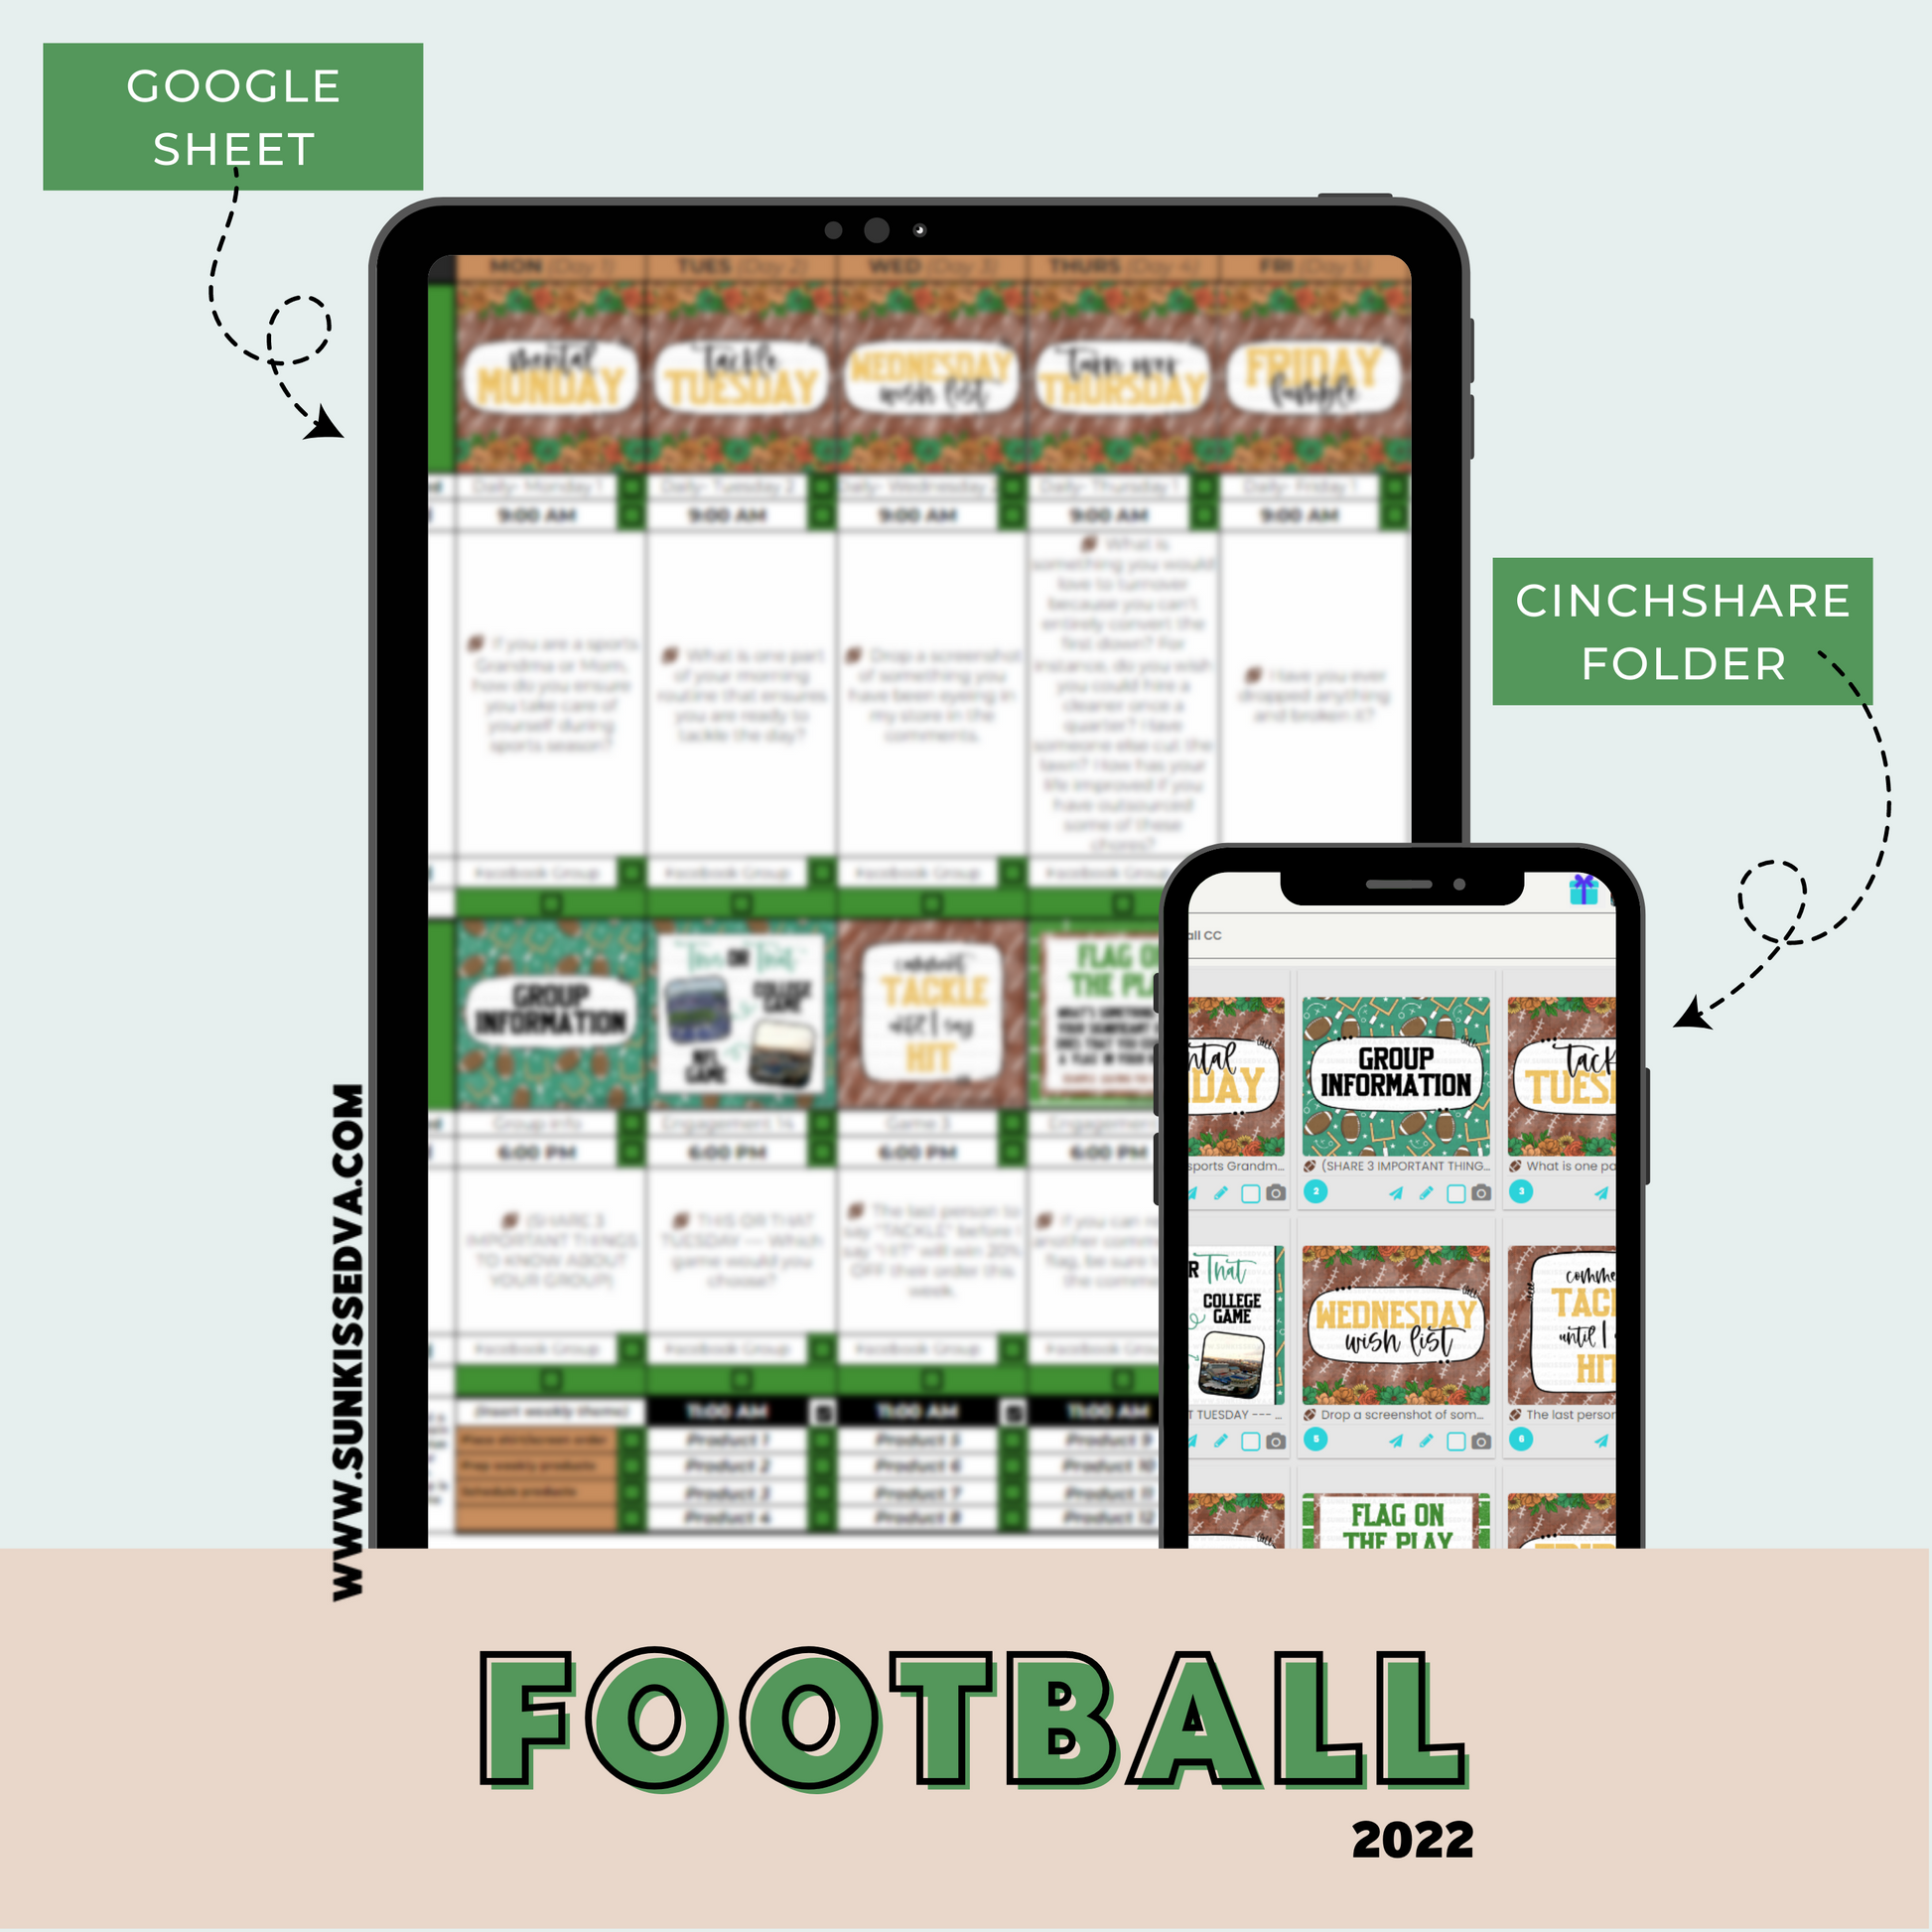 Football Content Calendar | Sun Kissed Virtual Assistant